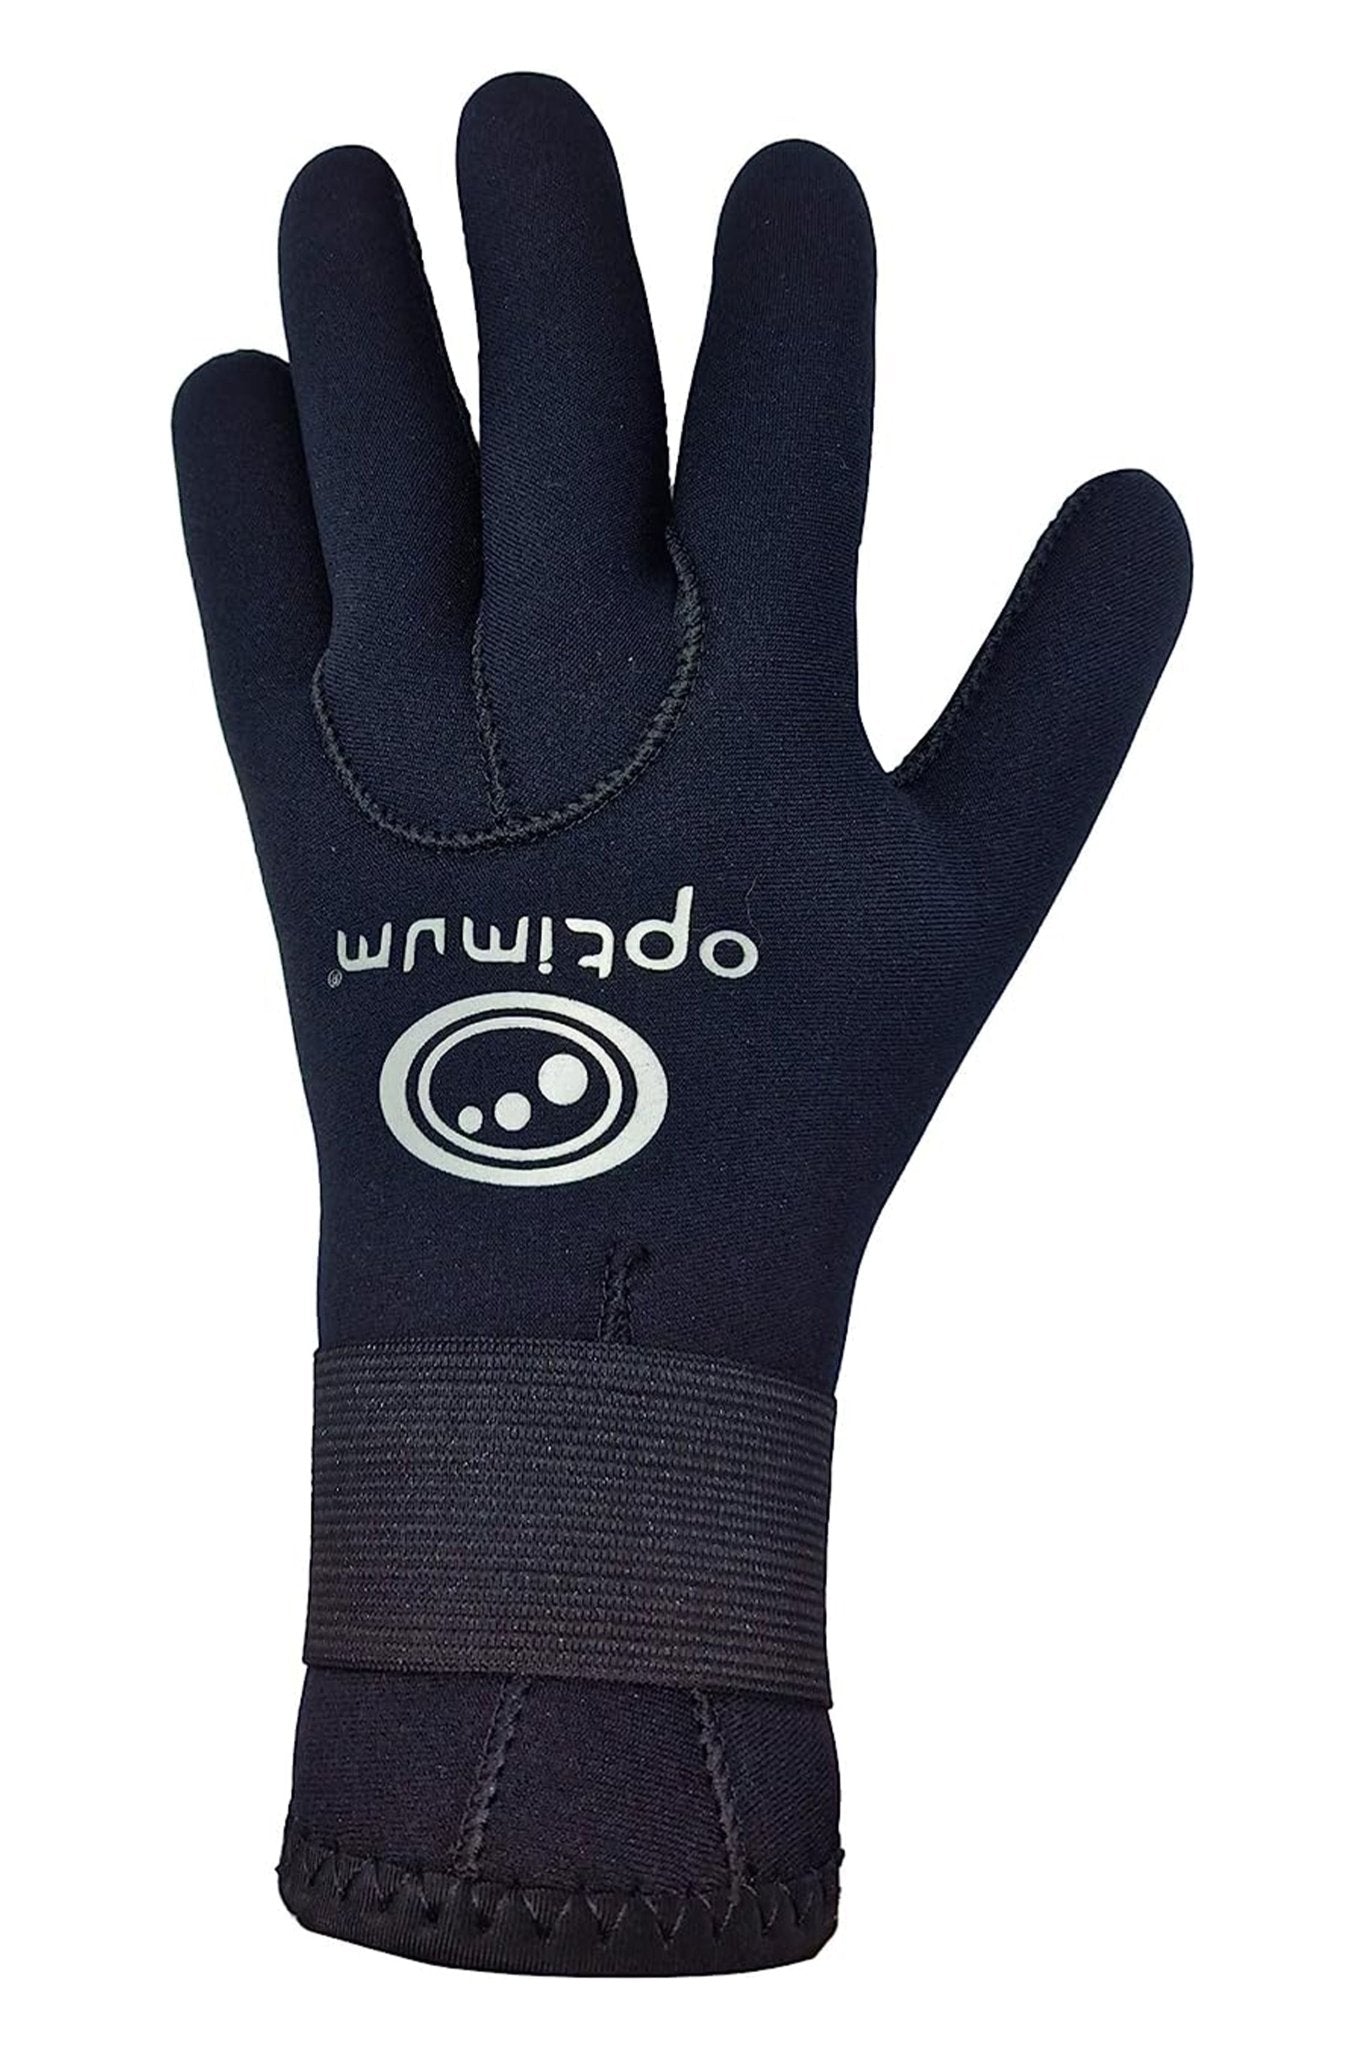 Optimum Wetsuit Neoprene Gloves, 3mm Surfing, Diving, Kayaking, Water